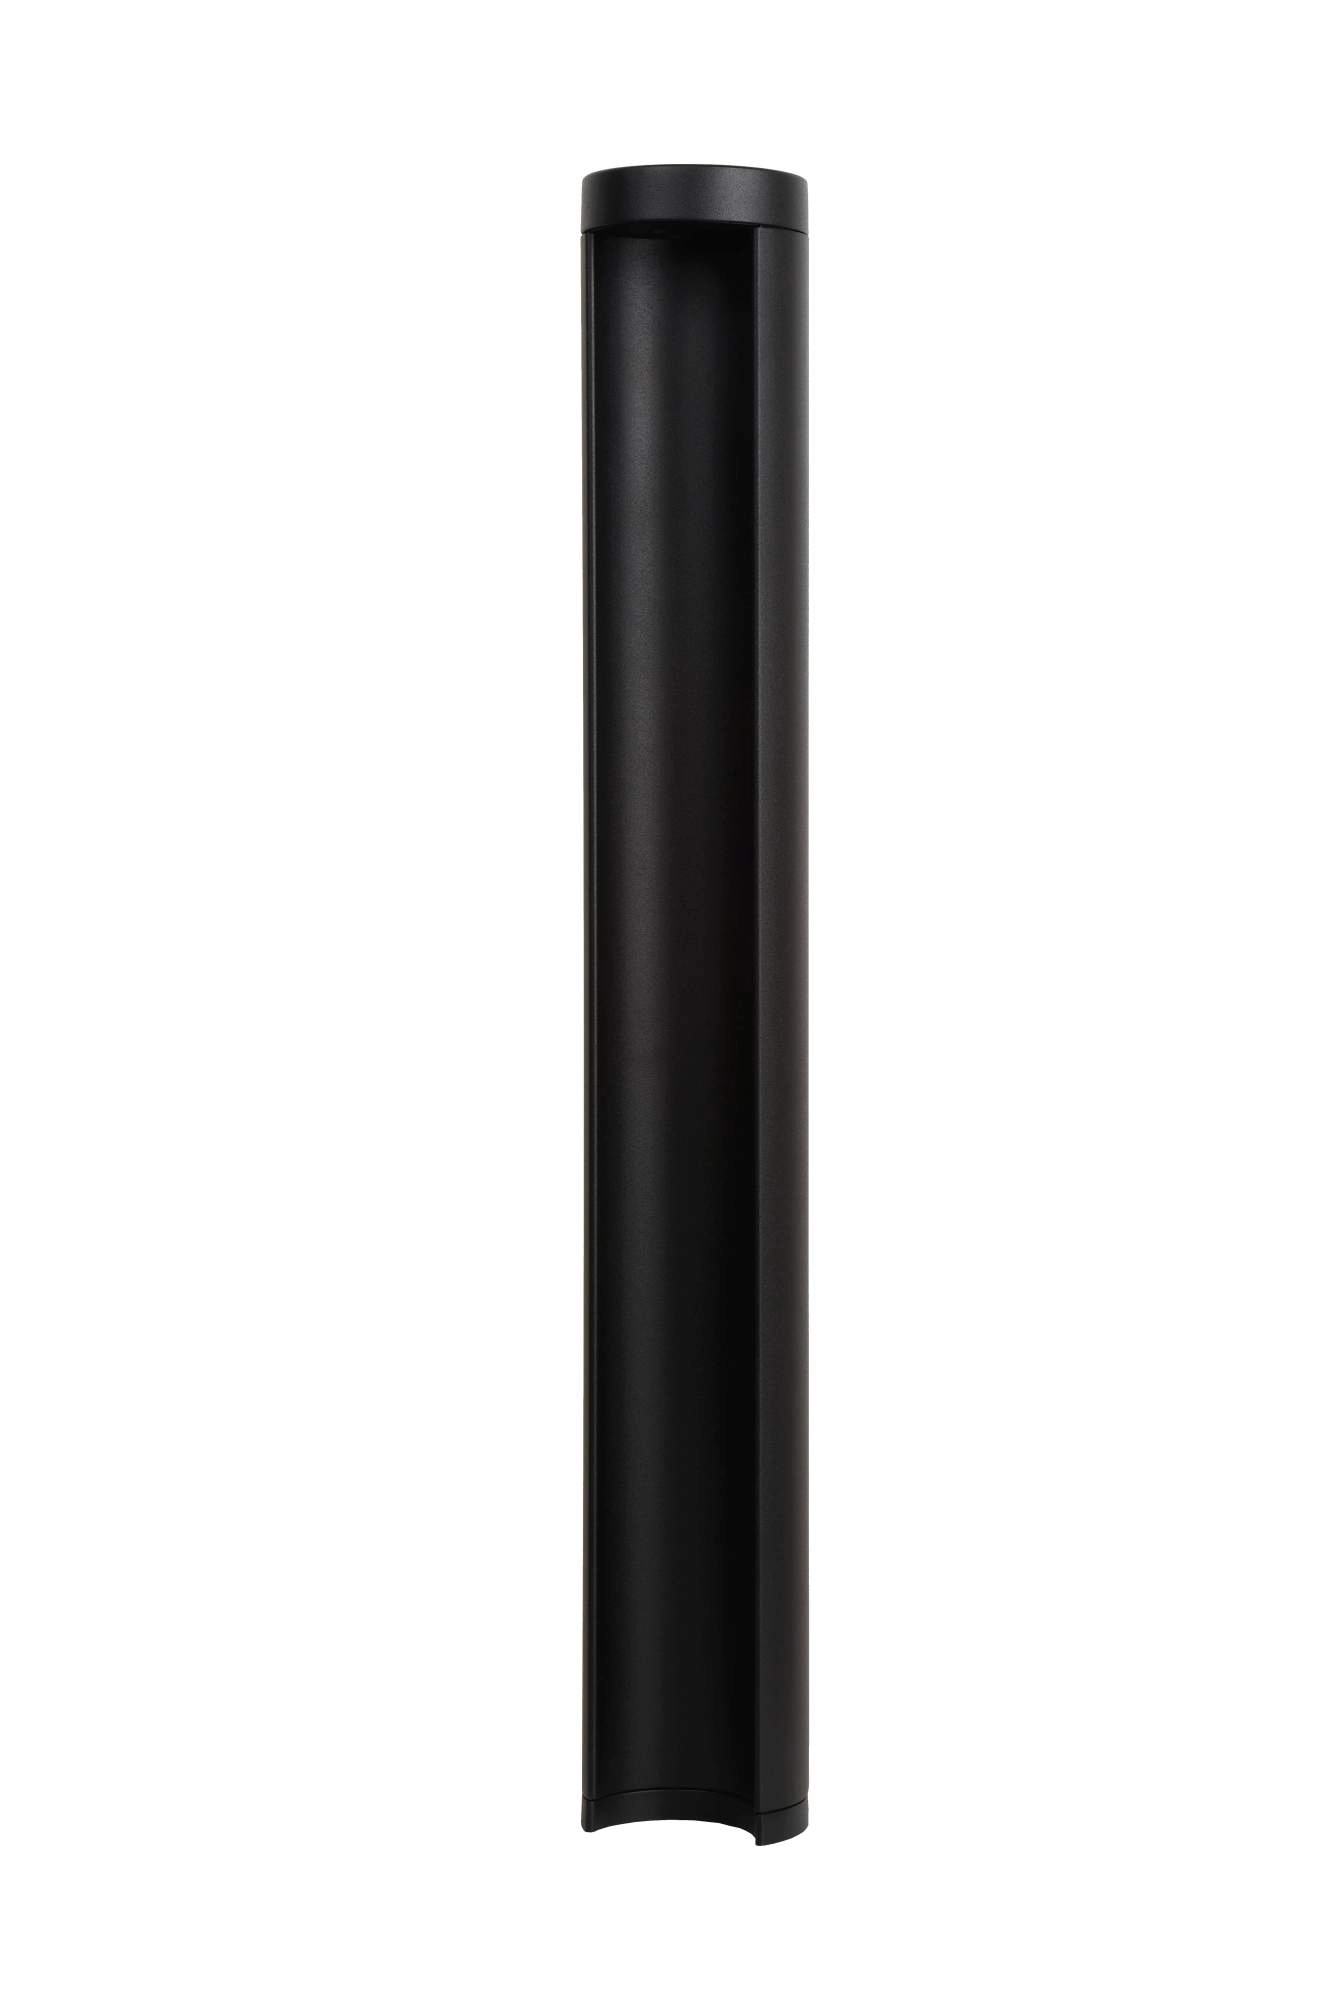 LU 27874/65/30 Lucide COMBO - Bollard light Outdoor - Ø 9 cm - LED - 1x9W 3000K - IP54 - Black